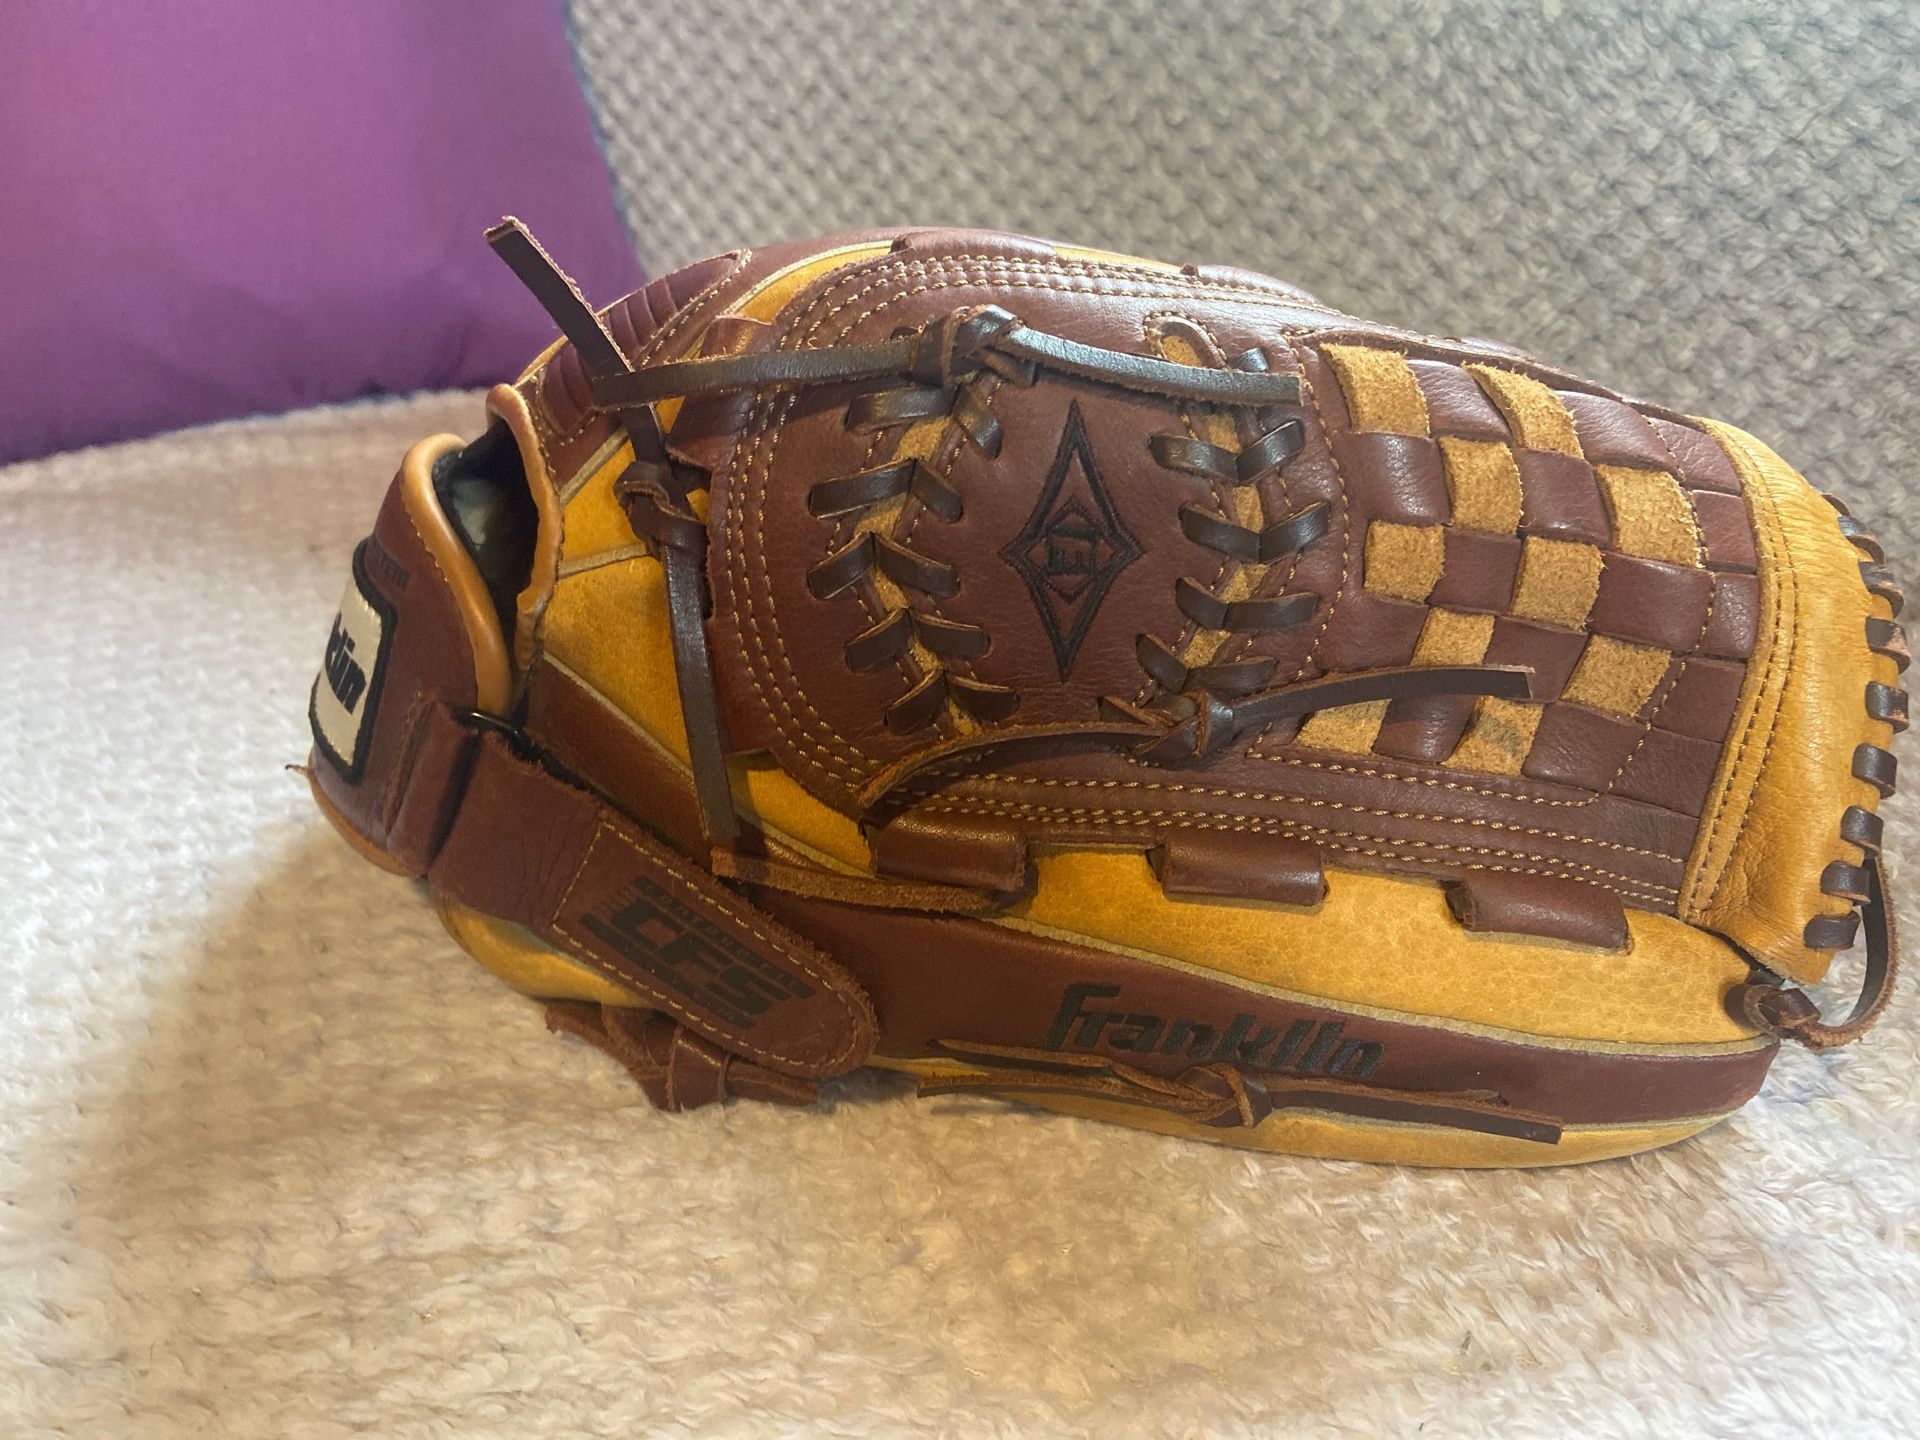 Franklin RTP series 14” softball glove